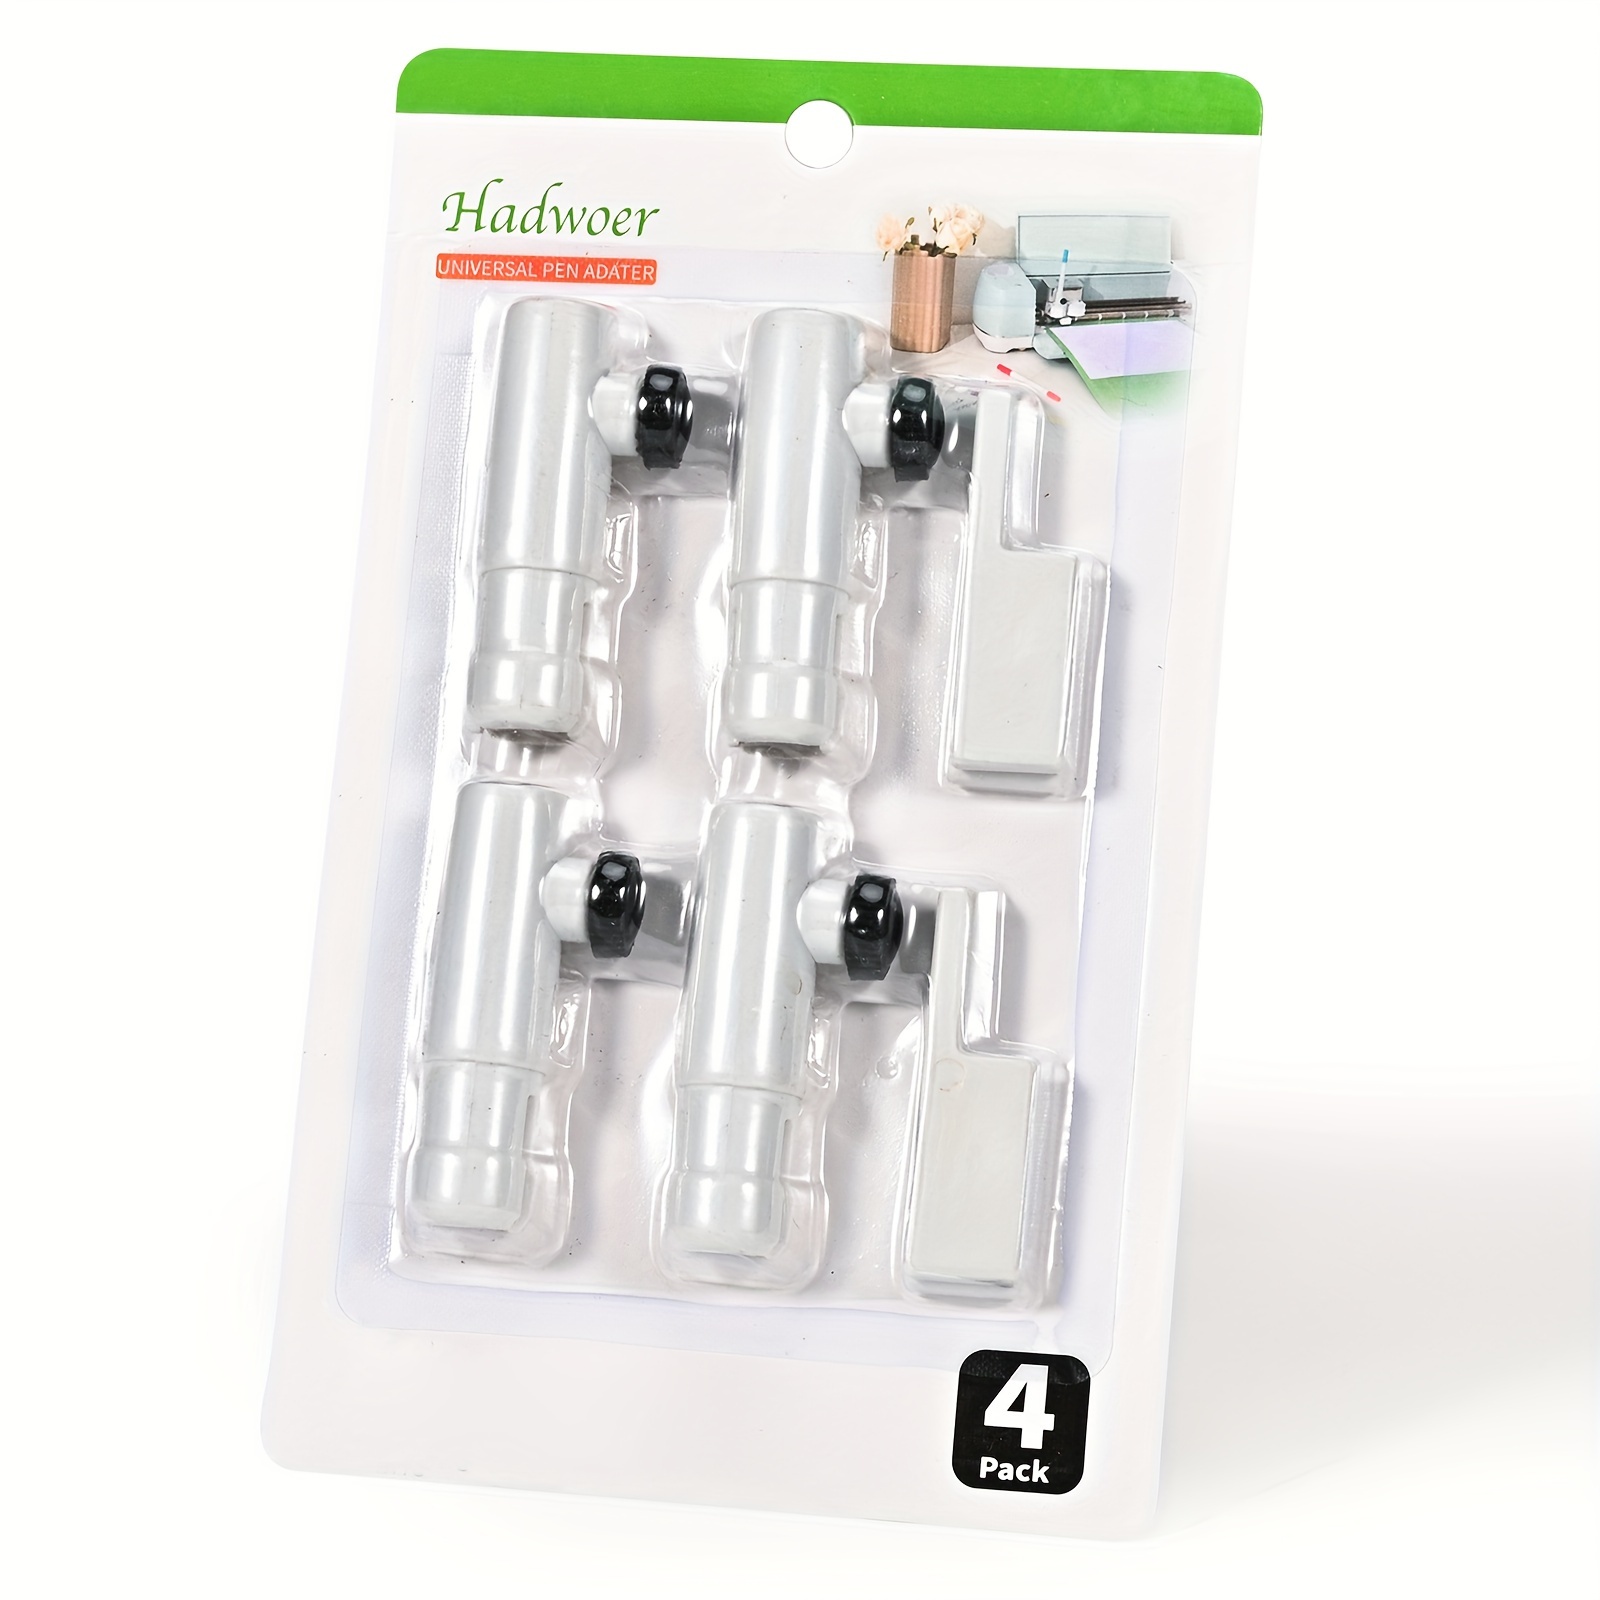 Pen Adapter Set Compatible With Cricut Joy, Pen Adapter Set